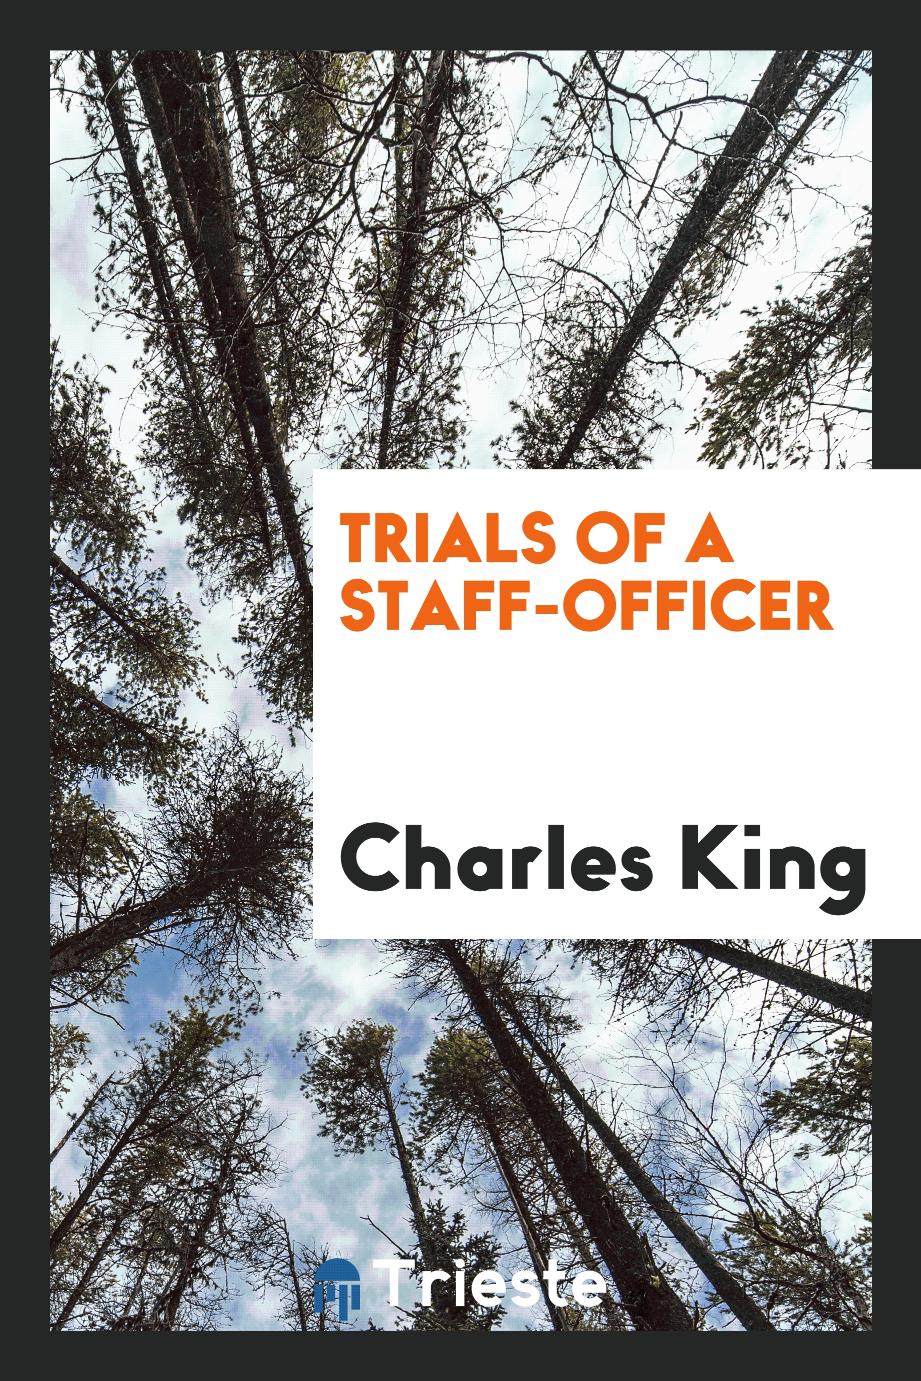 Trials of a staff-officer